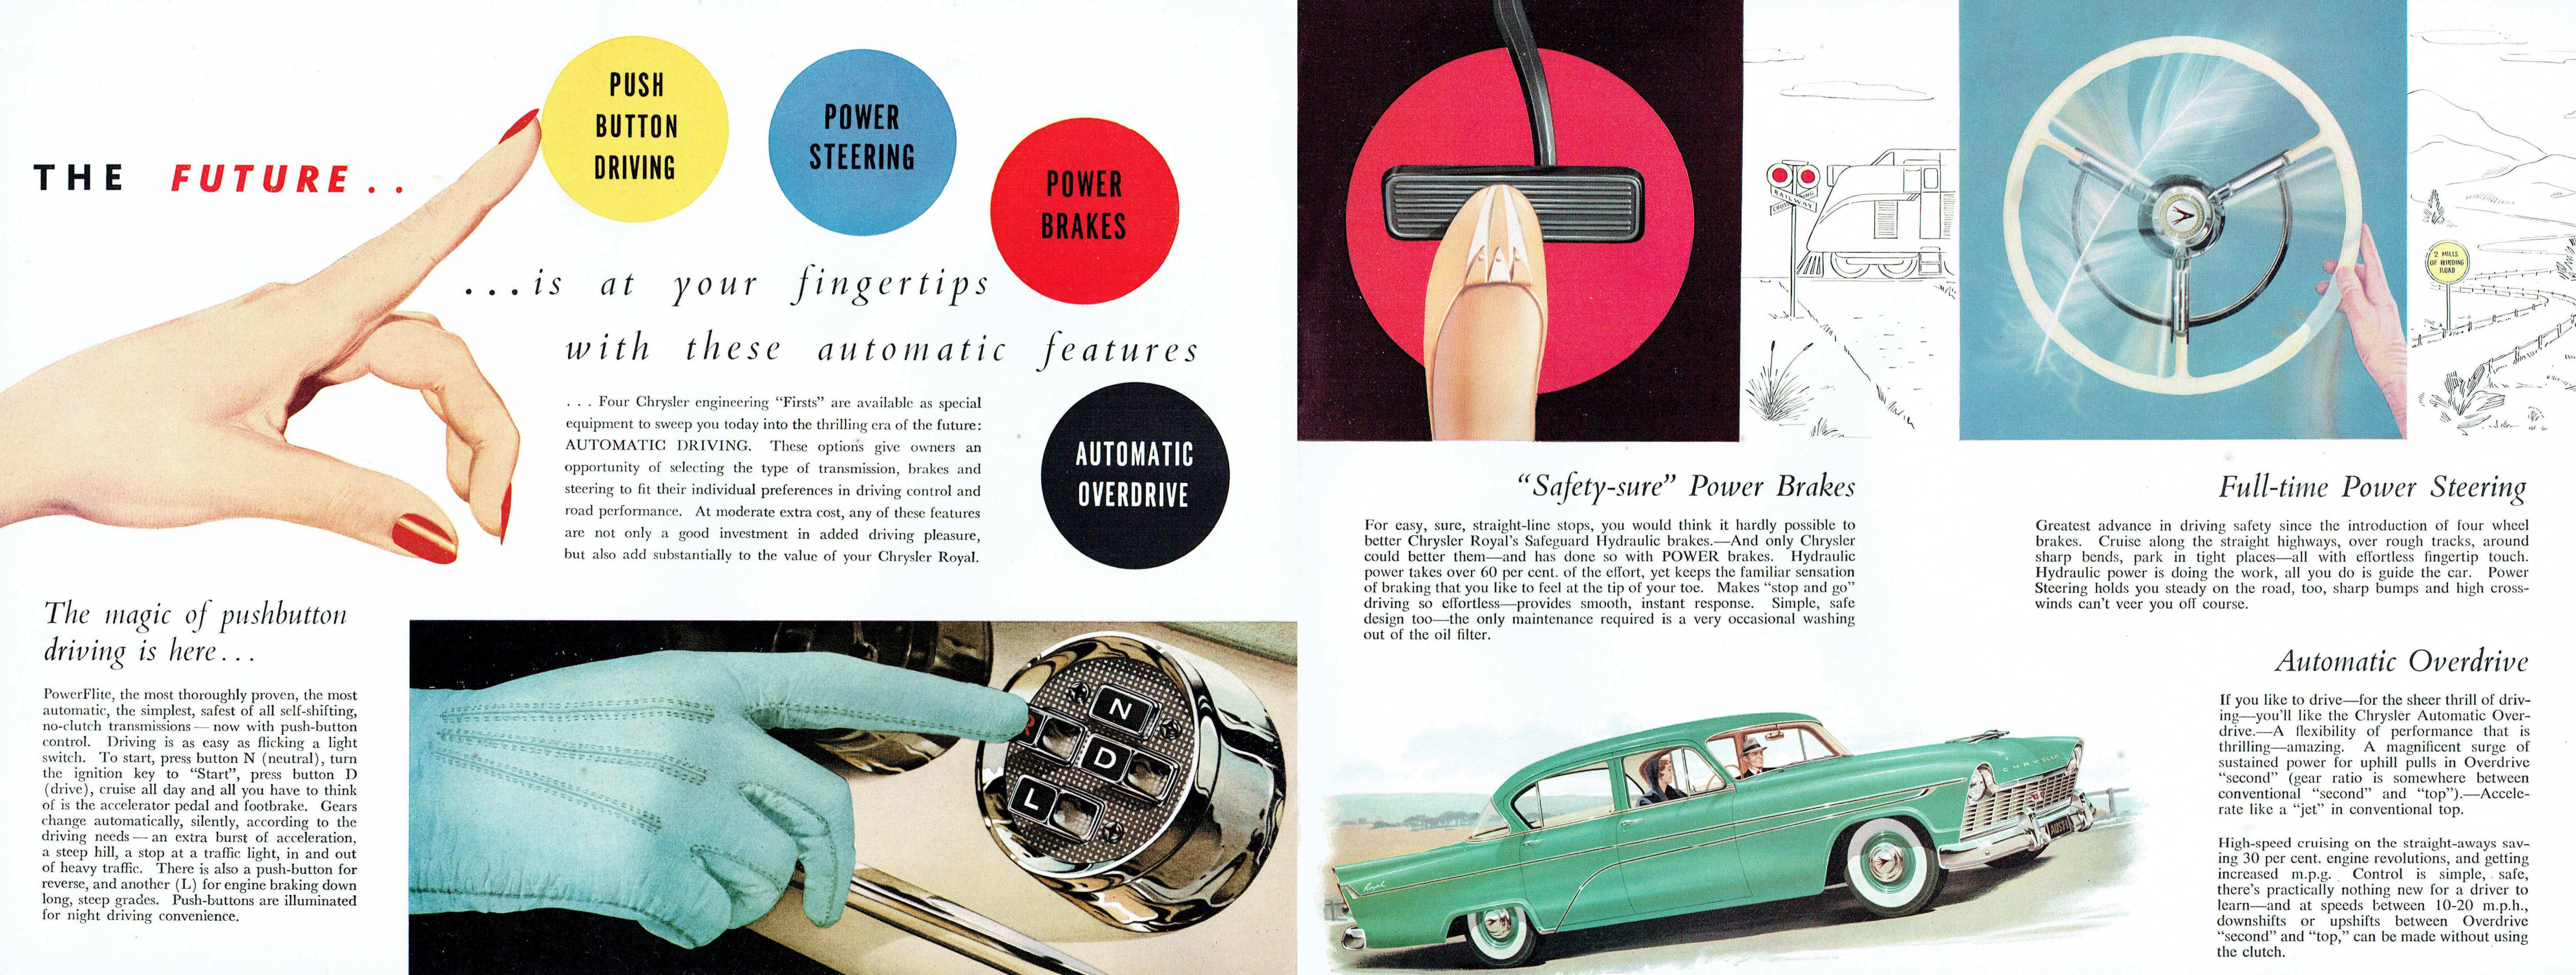 1957_Chrysler_AP1_Royal-08-09